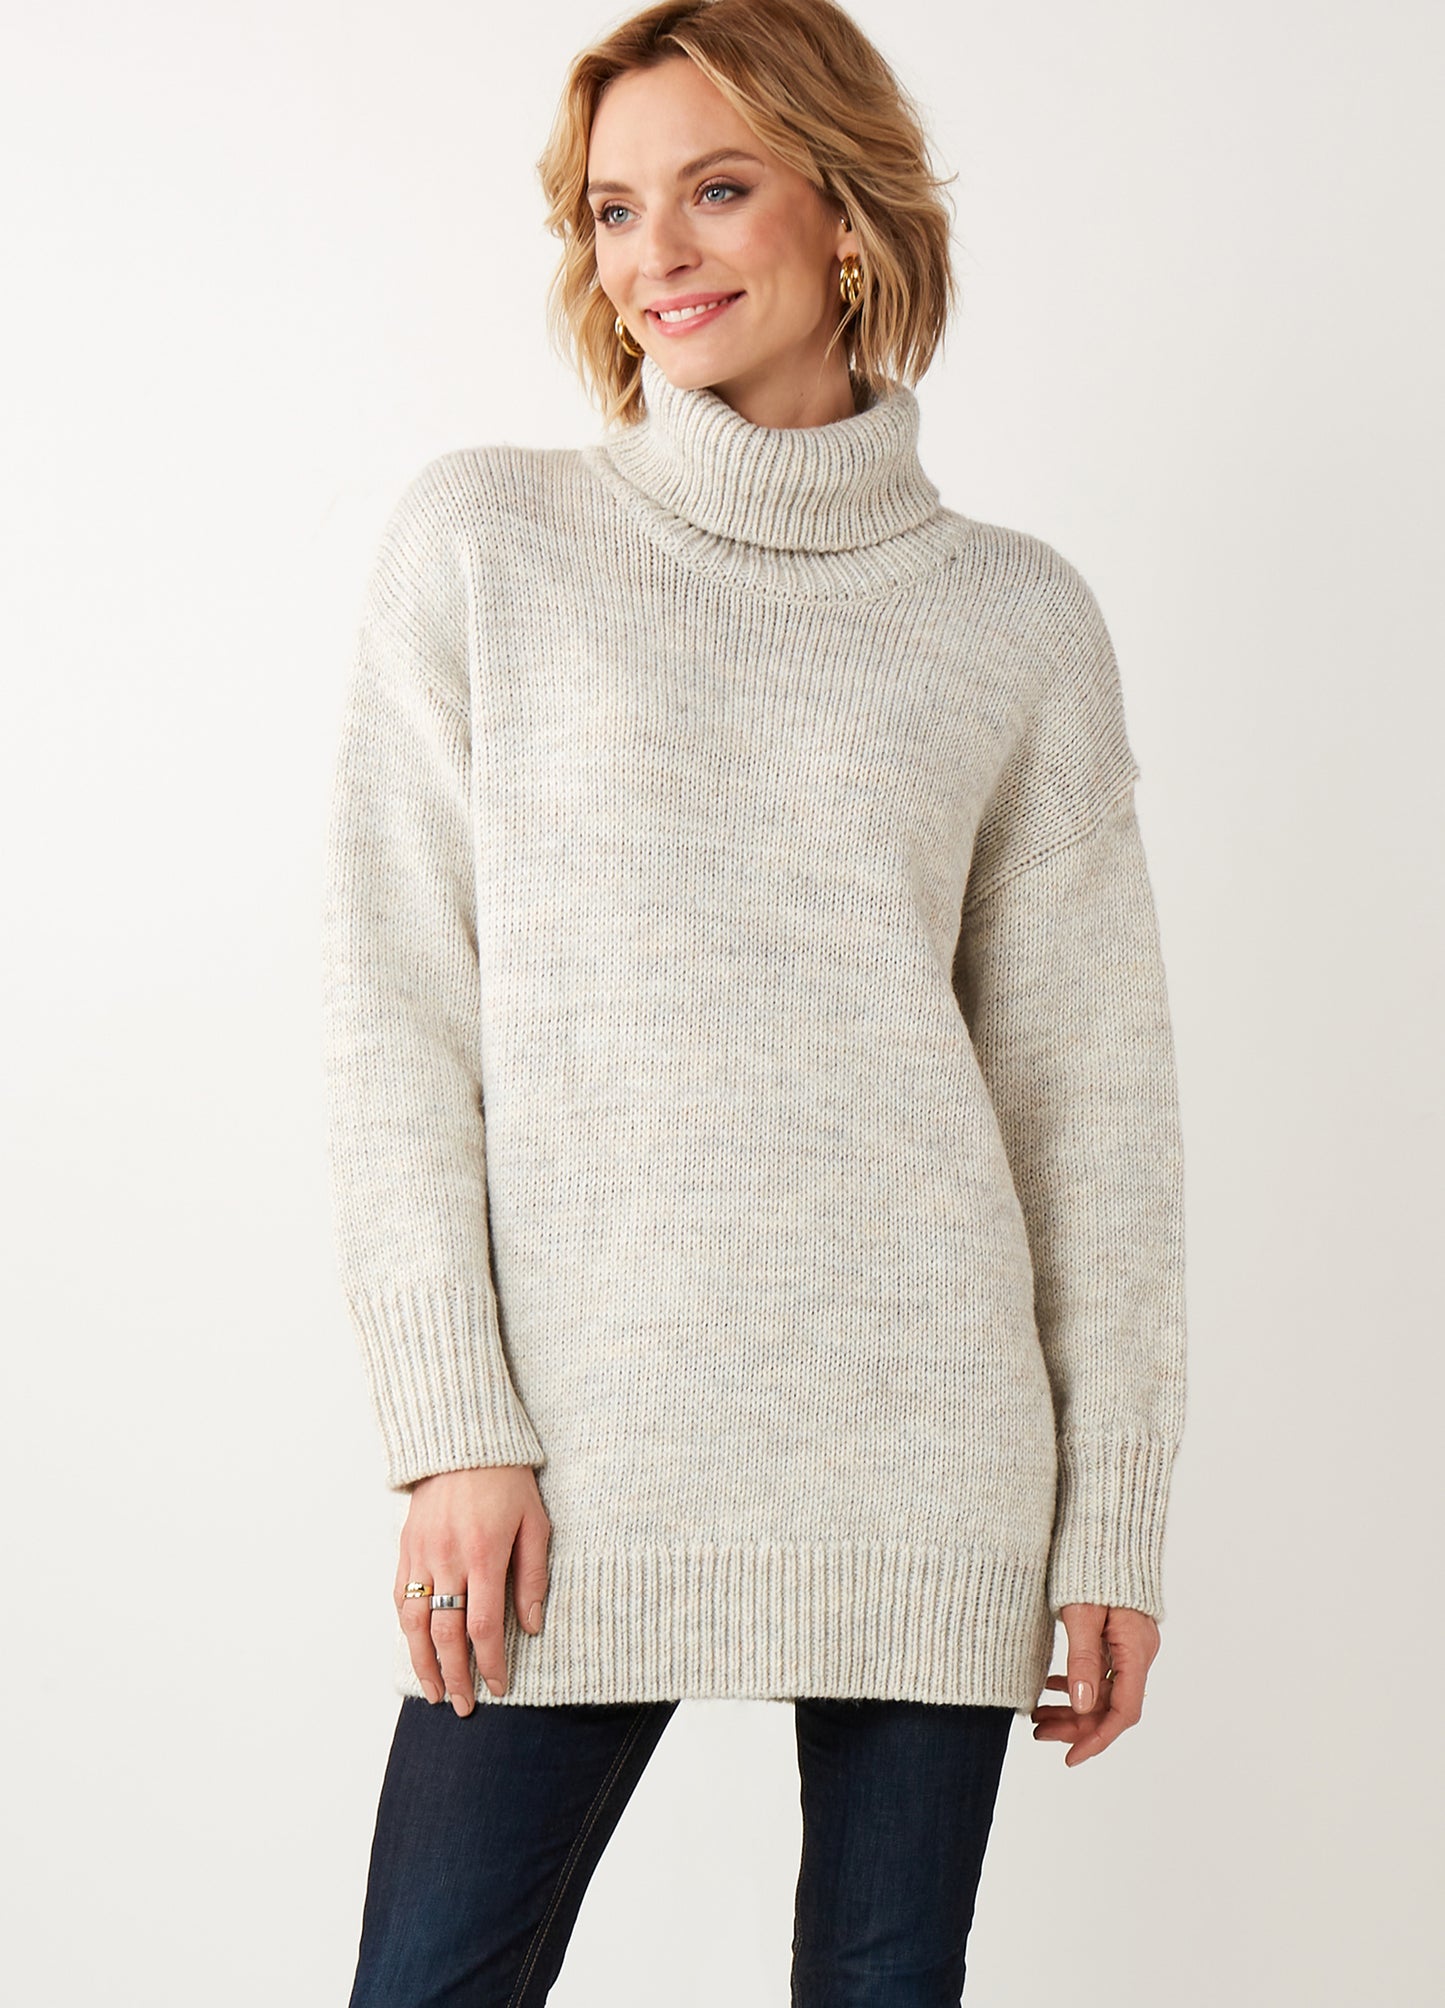 Charlie Paige Greta Turtleneck Sweater